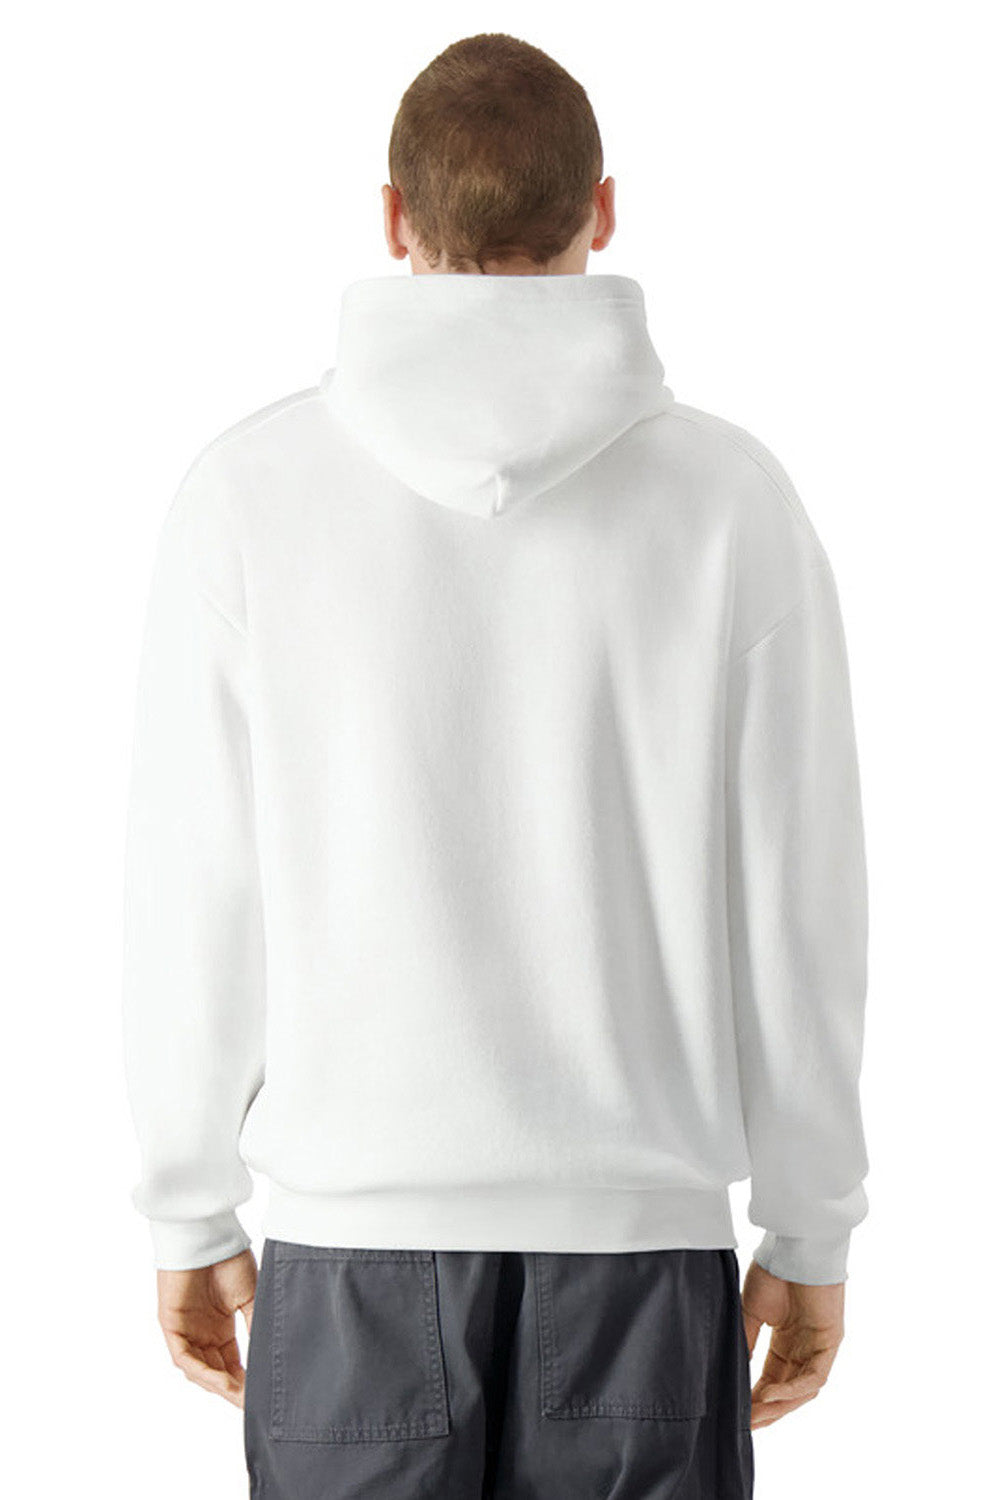 American Apparel RF498 Mens ReFlex Fleece Hooded Sweatshirt Hoodie White Model Back